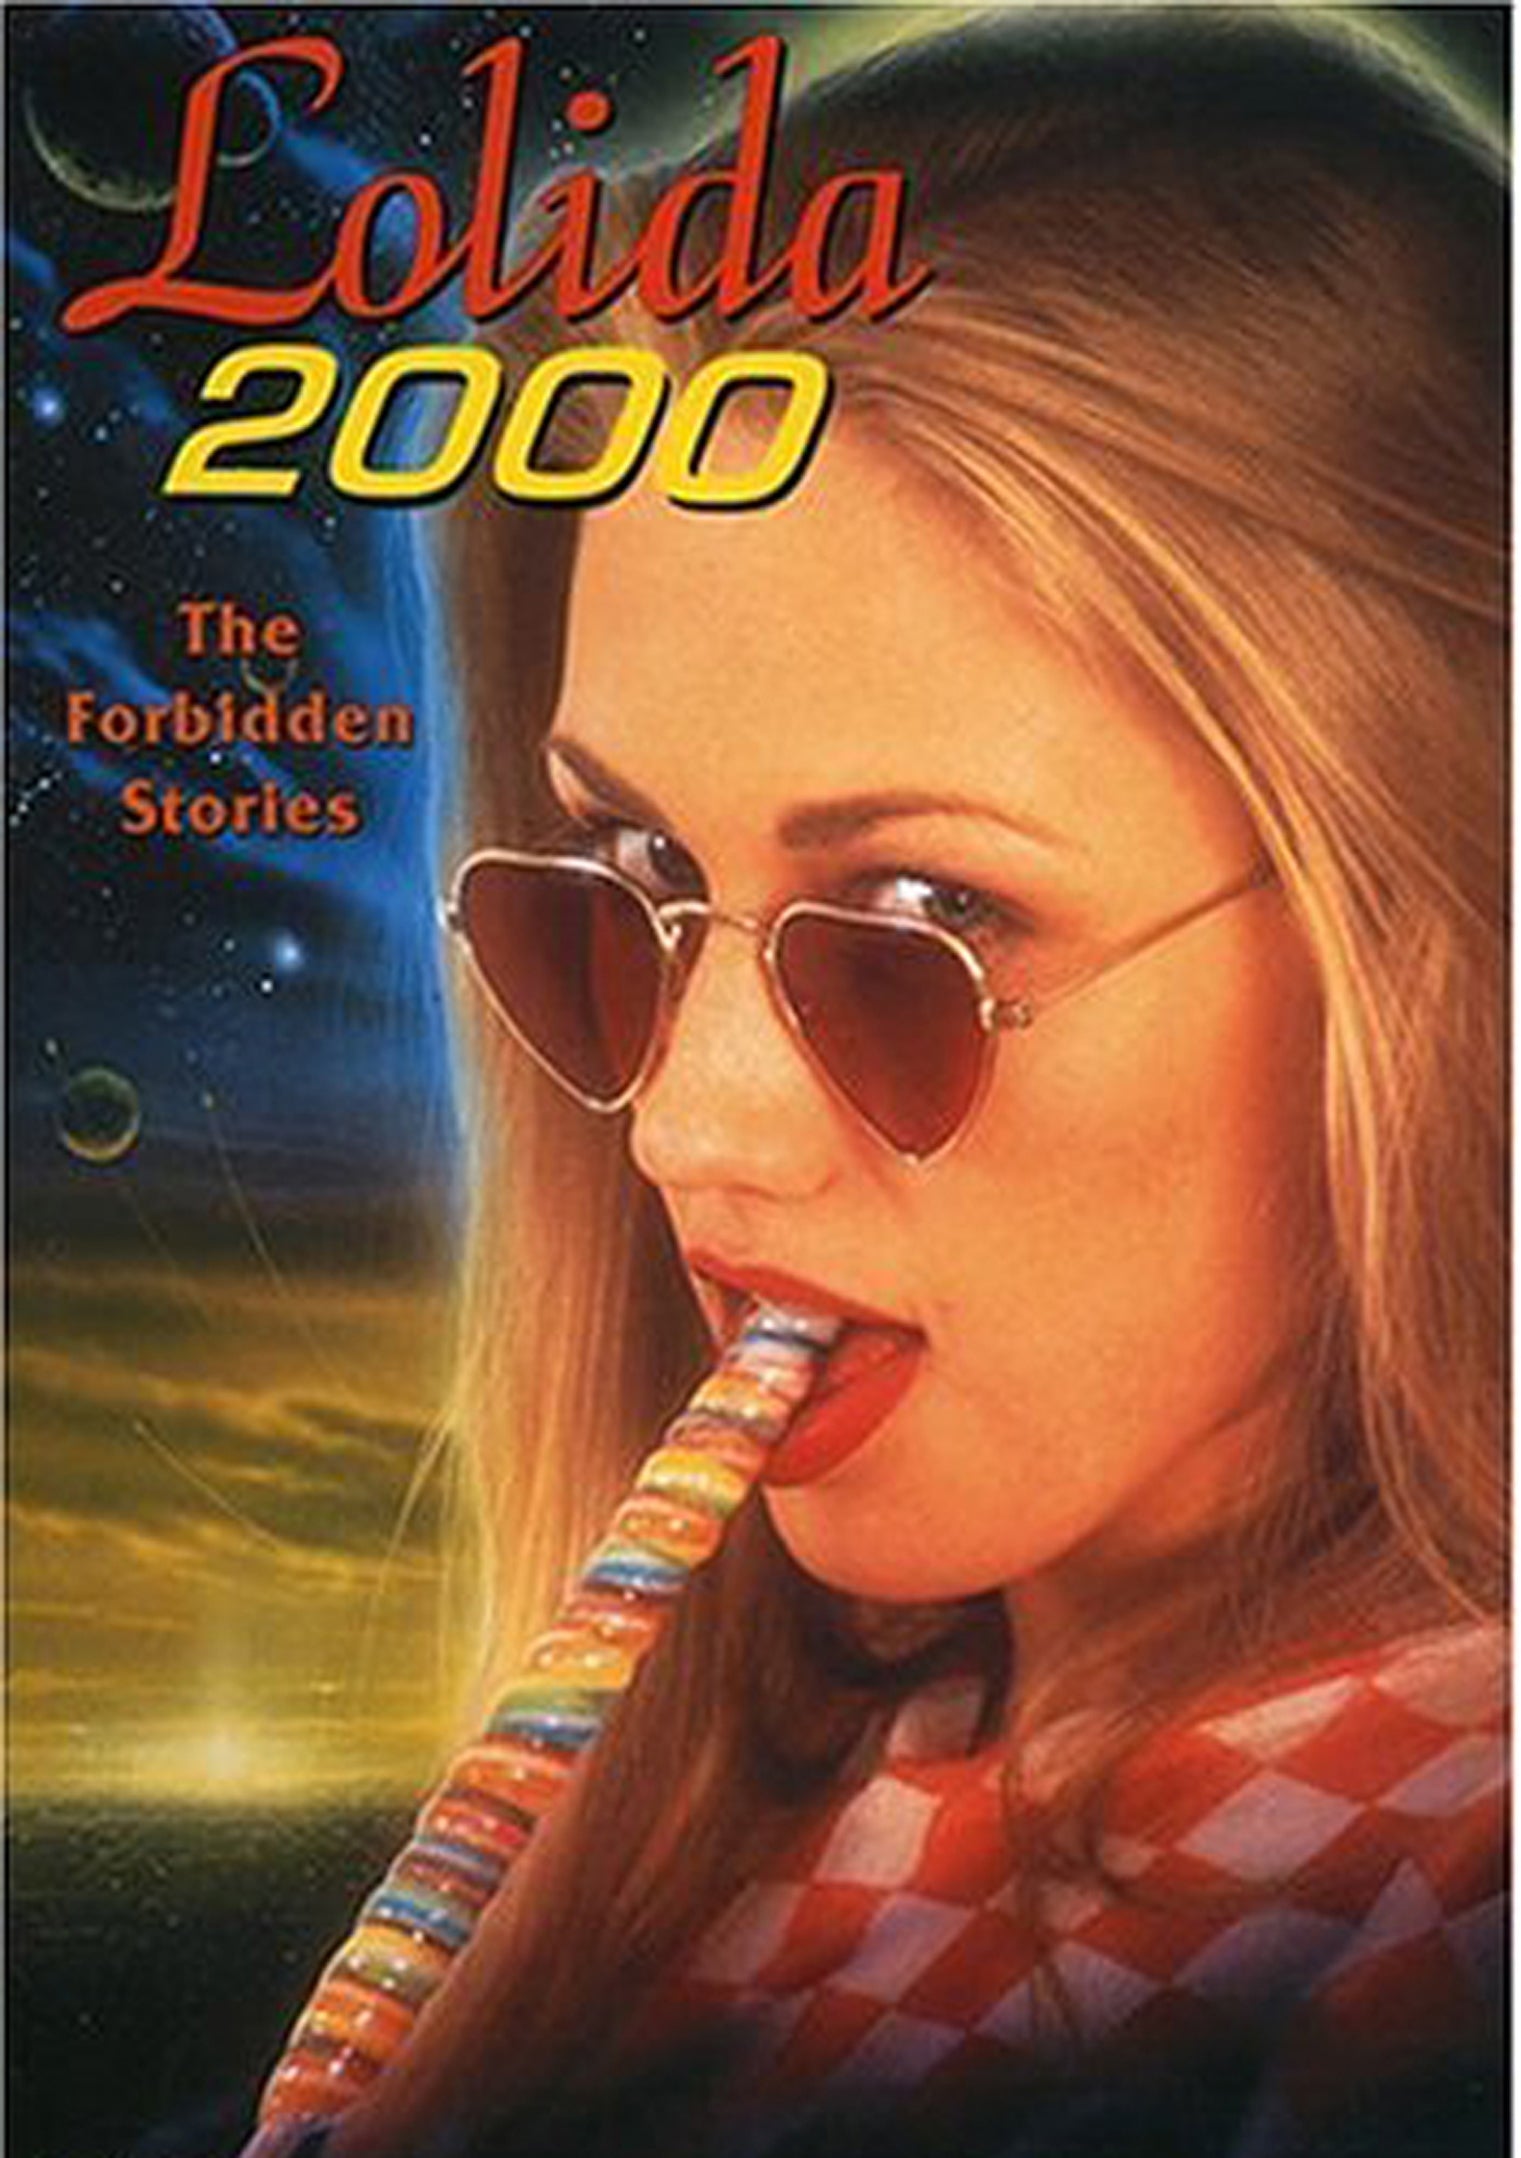 Lolida 2000 Dvd